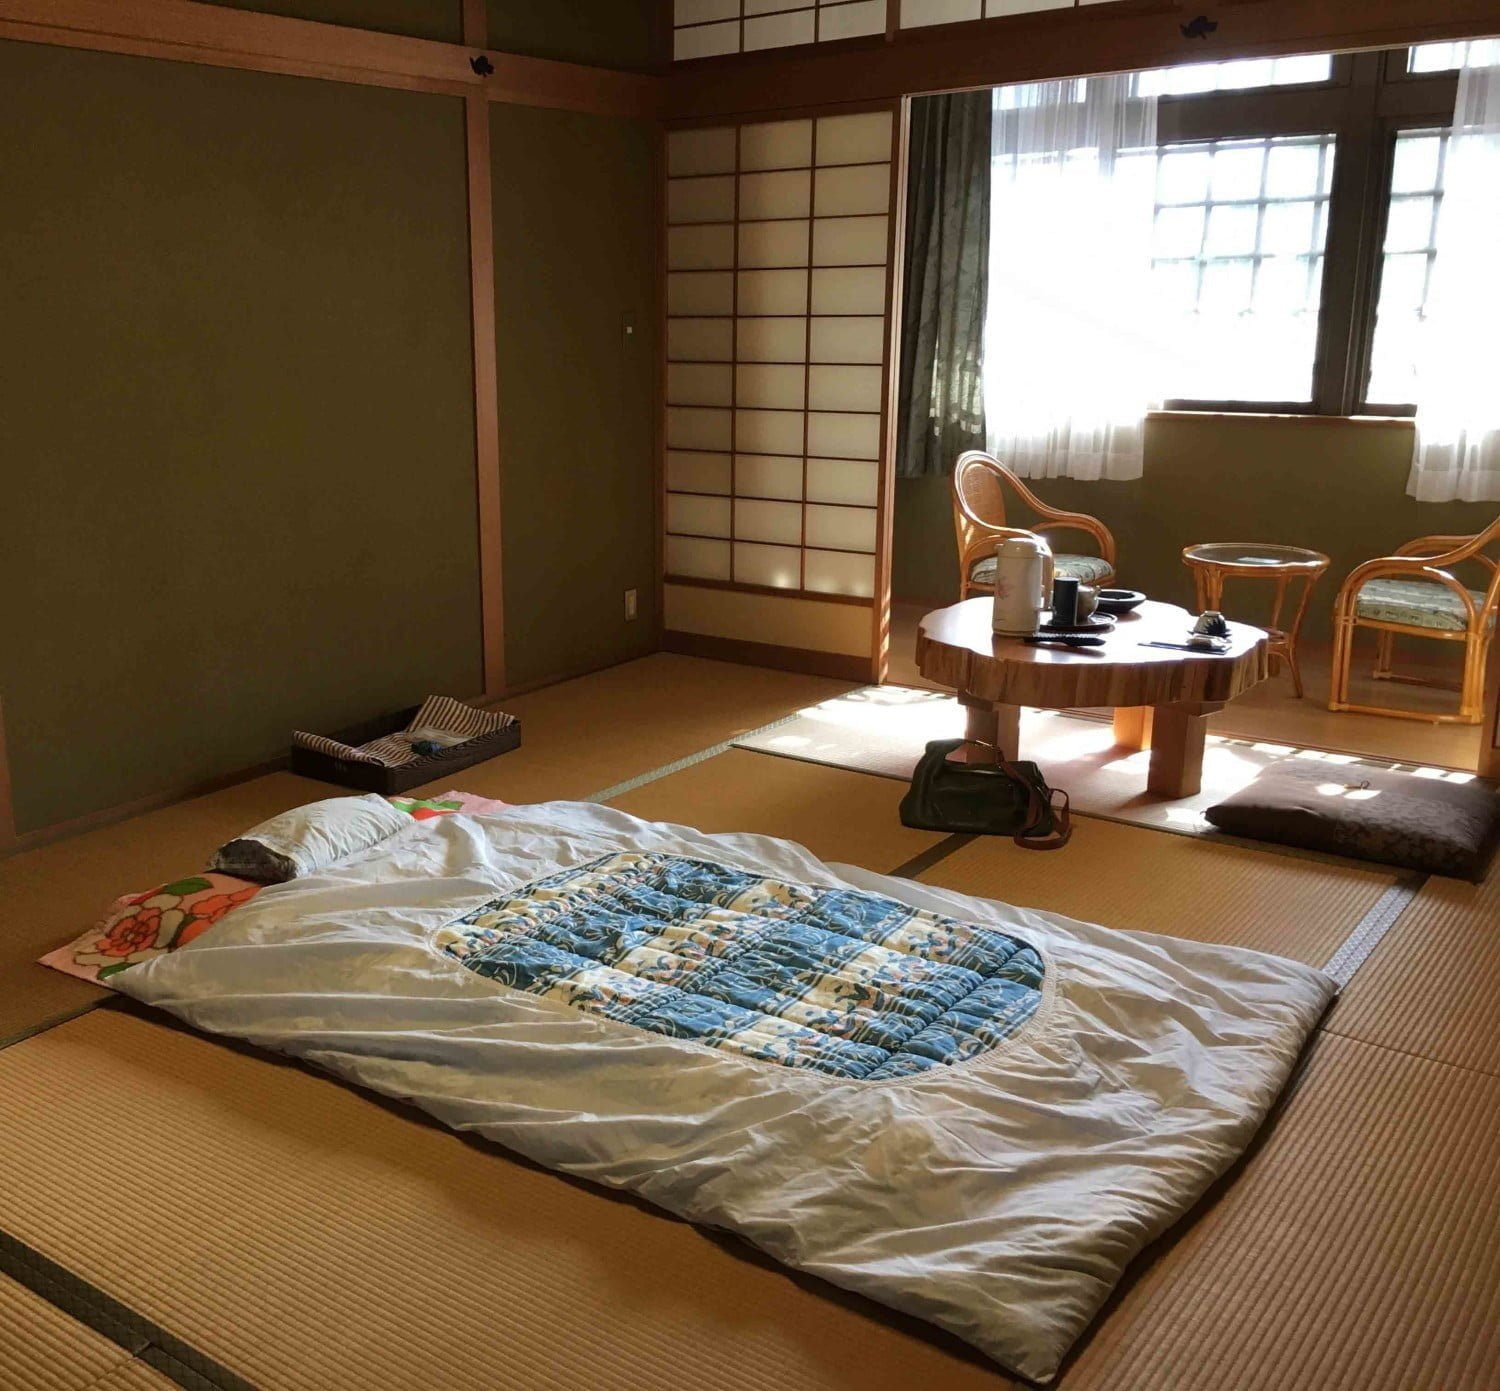 61 Inspirasi Dekorasi Kamar Tidur Ala Jepang Paling Populer di Dunia